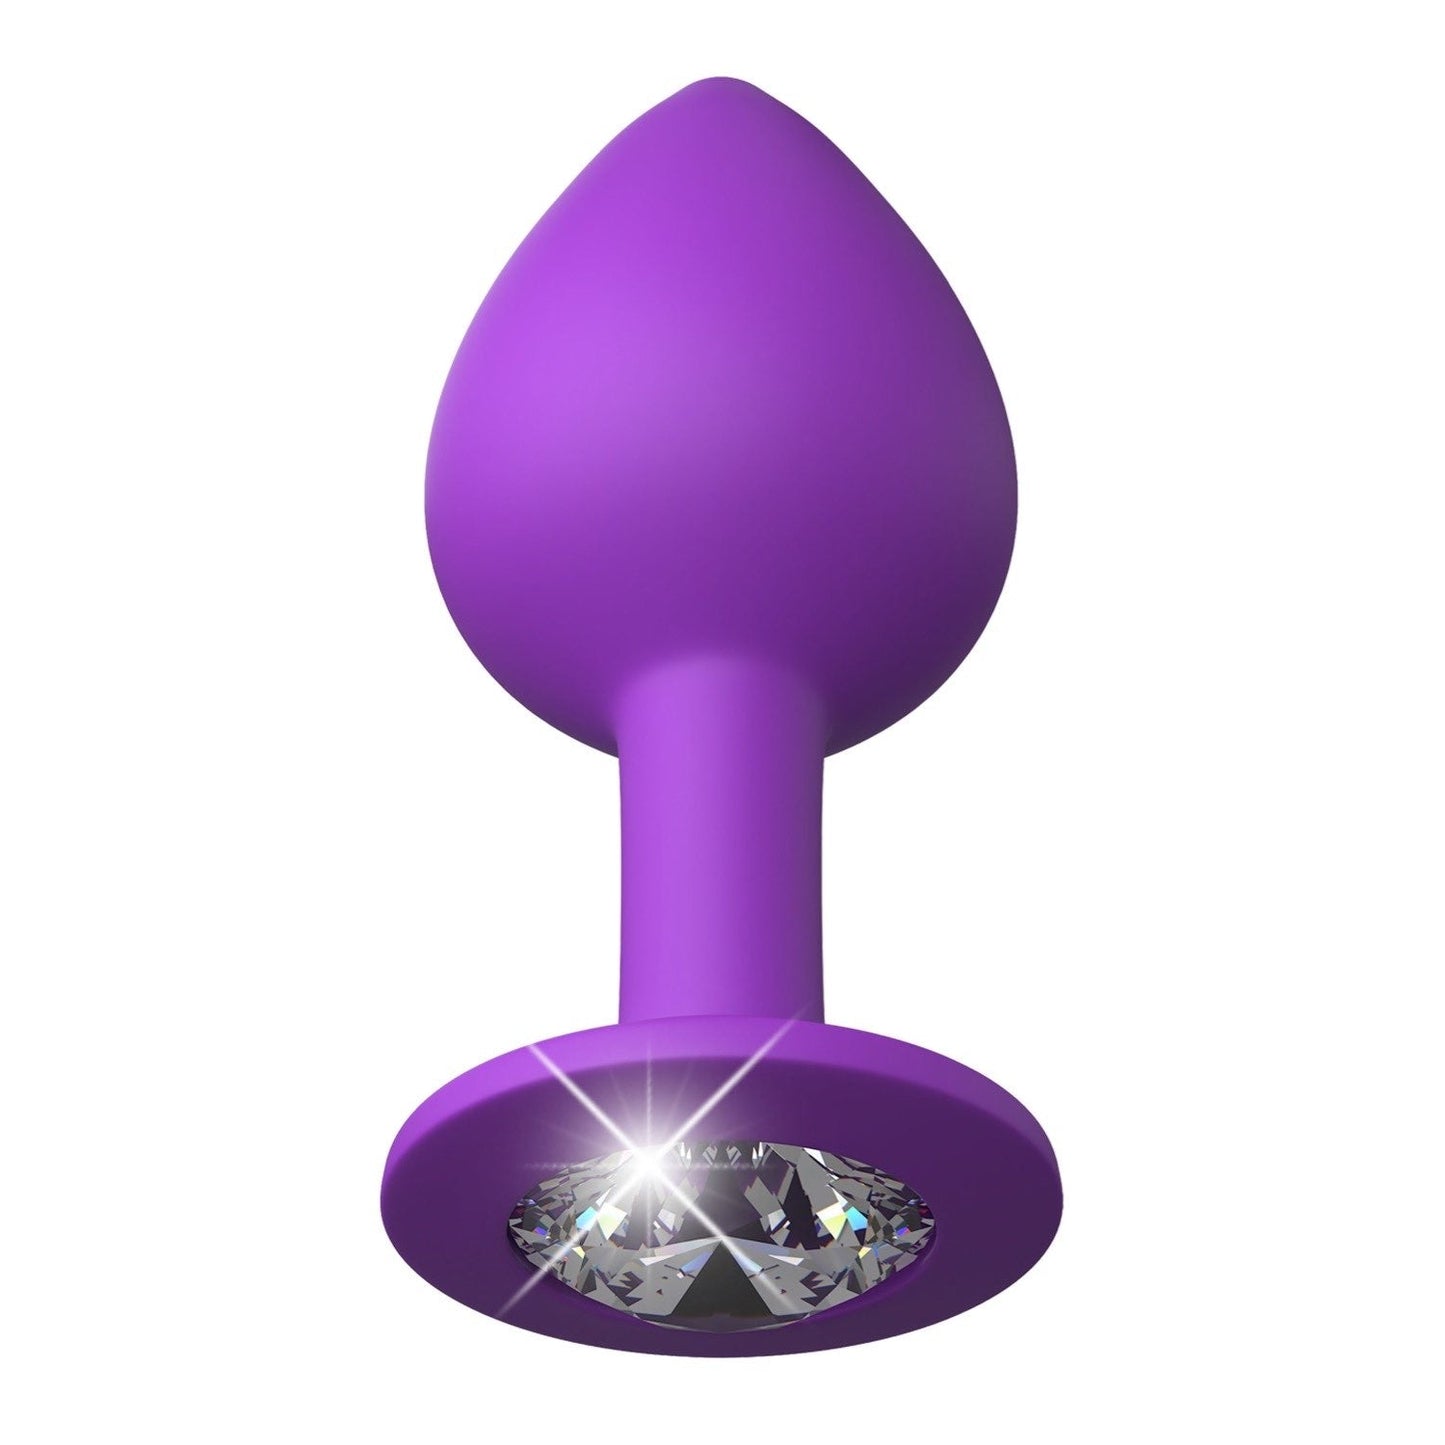 Little Gem Medium Plug - Purple 8.1 cm Butt Plug With Jewel Base